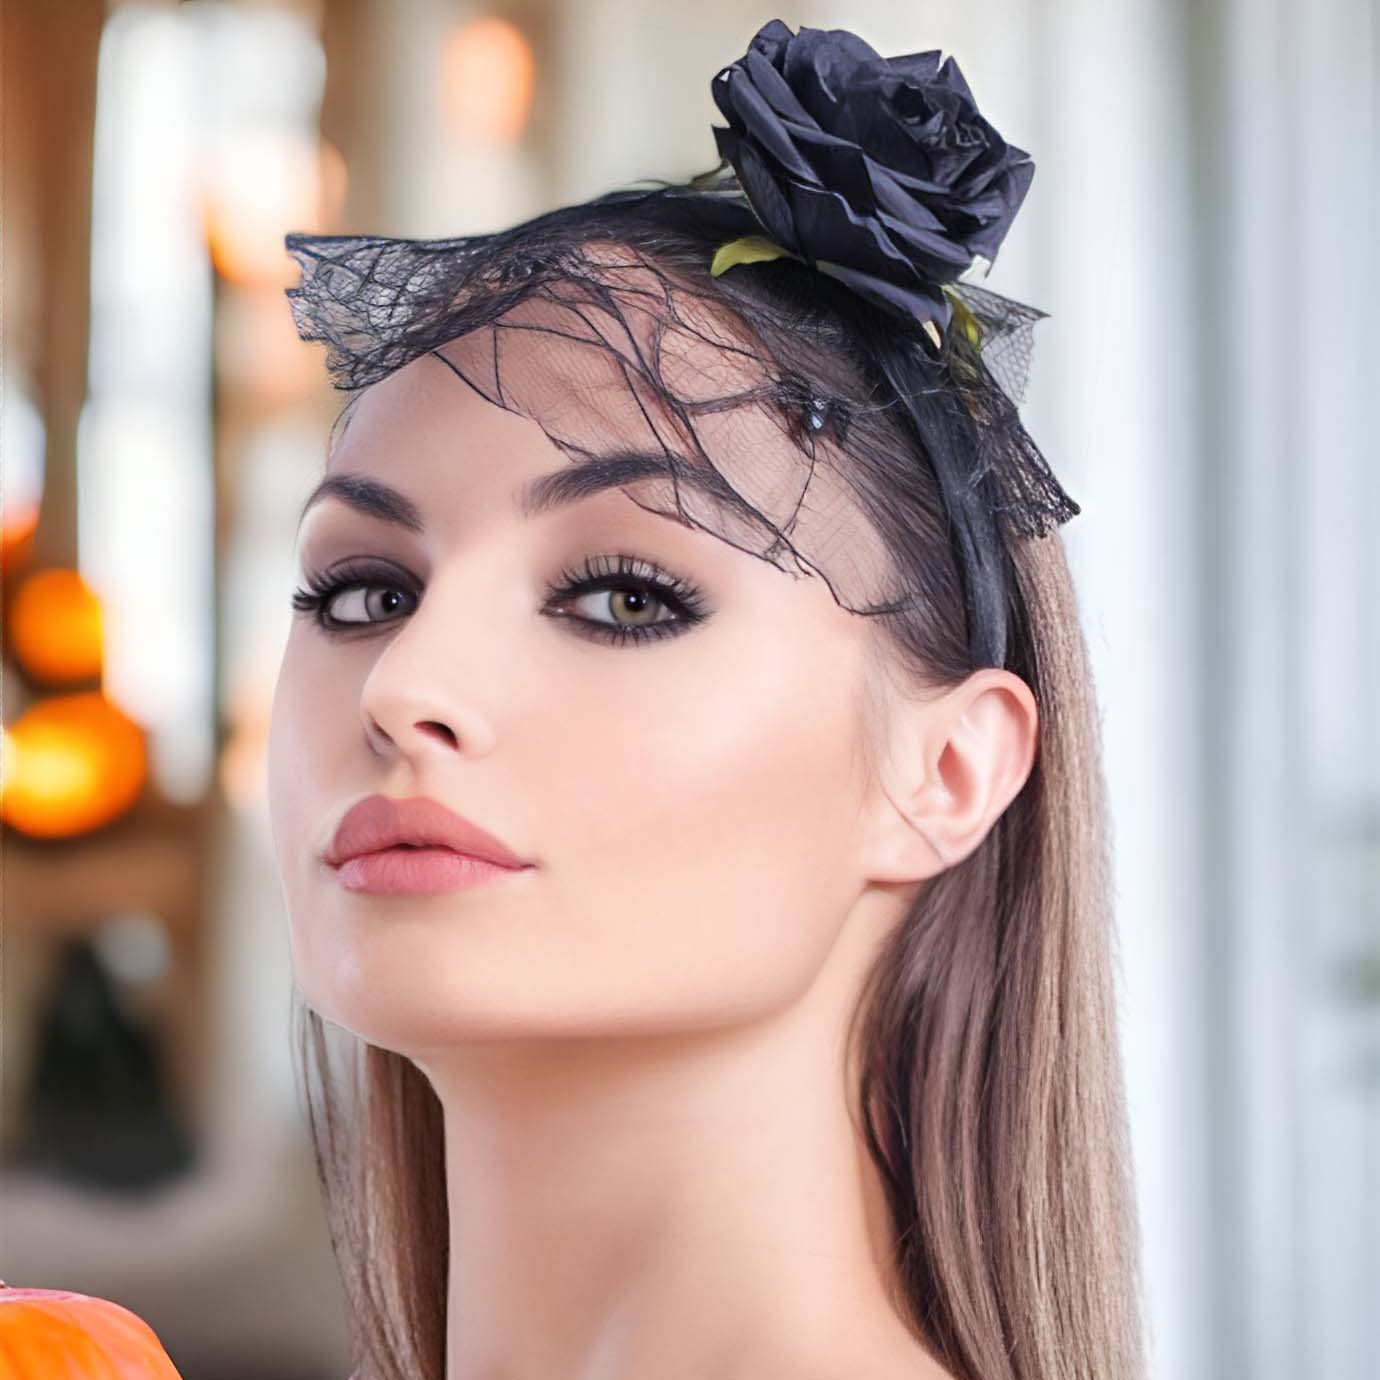 nevermindyrhead Halloween Headband for Women Black Rose Spider Net Lace Hair Accessories